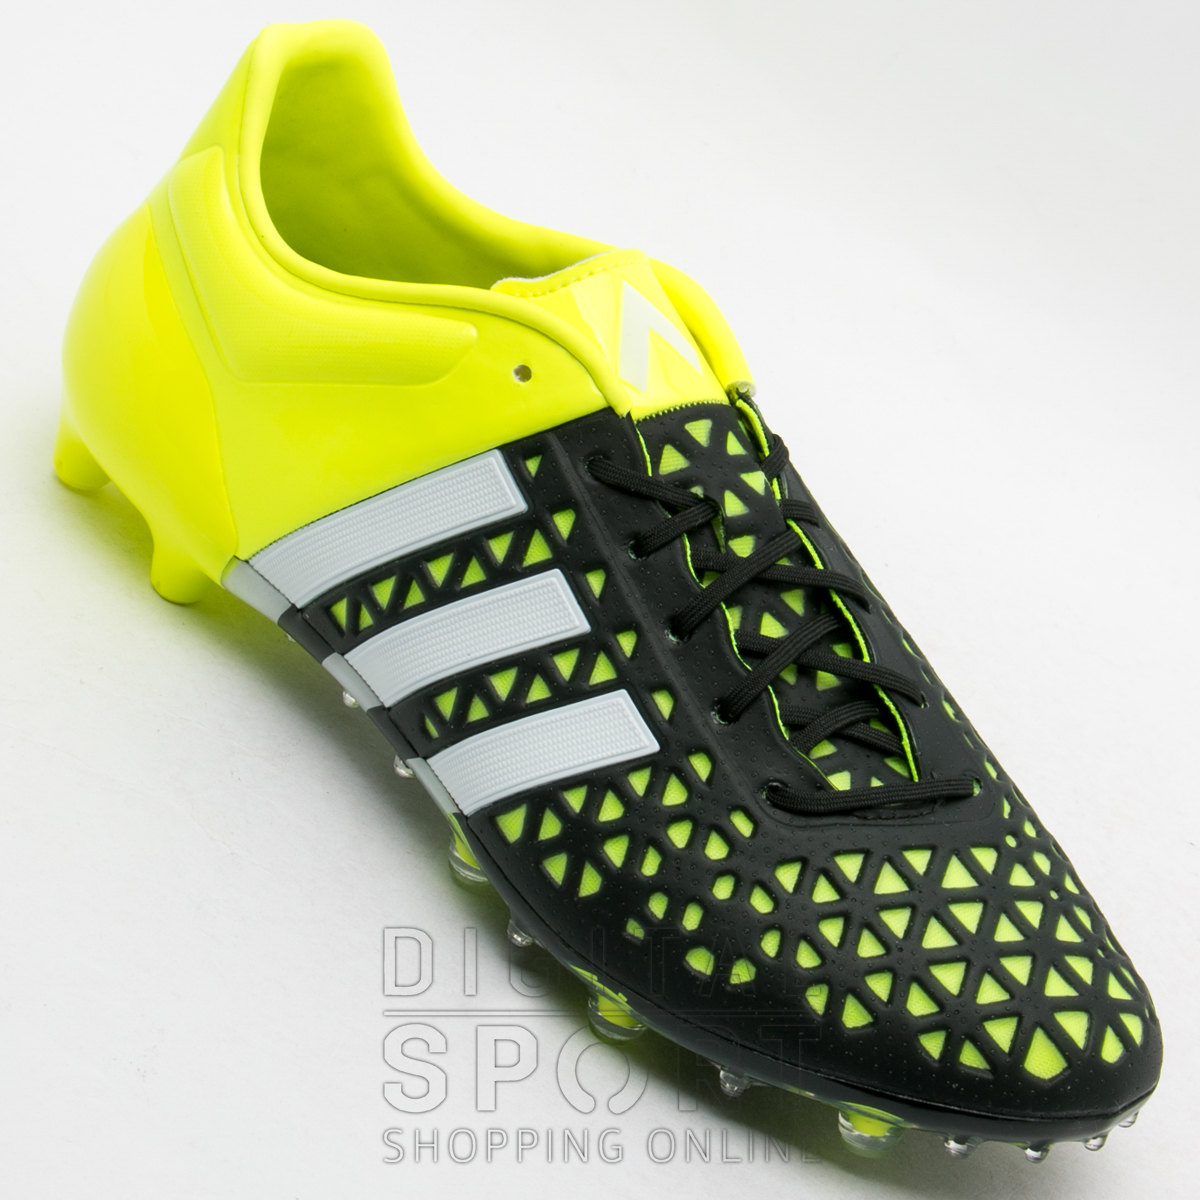 Botines Adidas X 15.1 United Kingdom, SAVE 37% - www.seishin-weimar.de